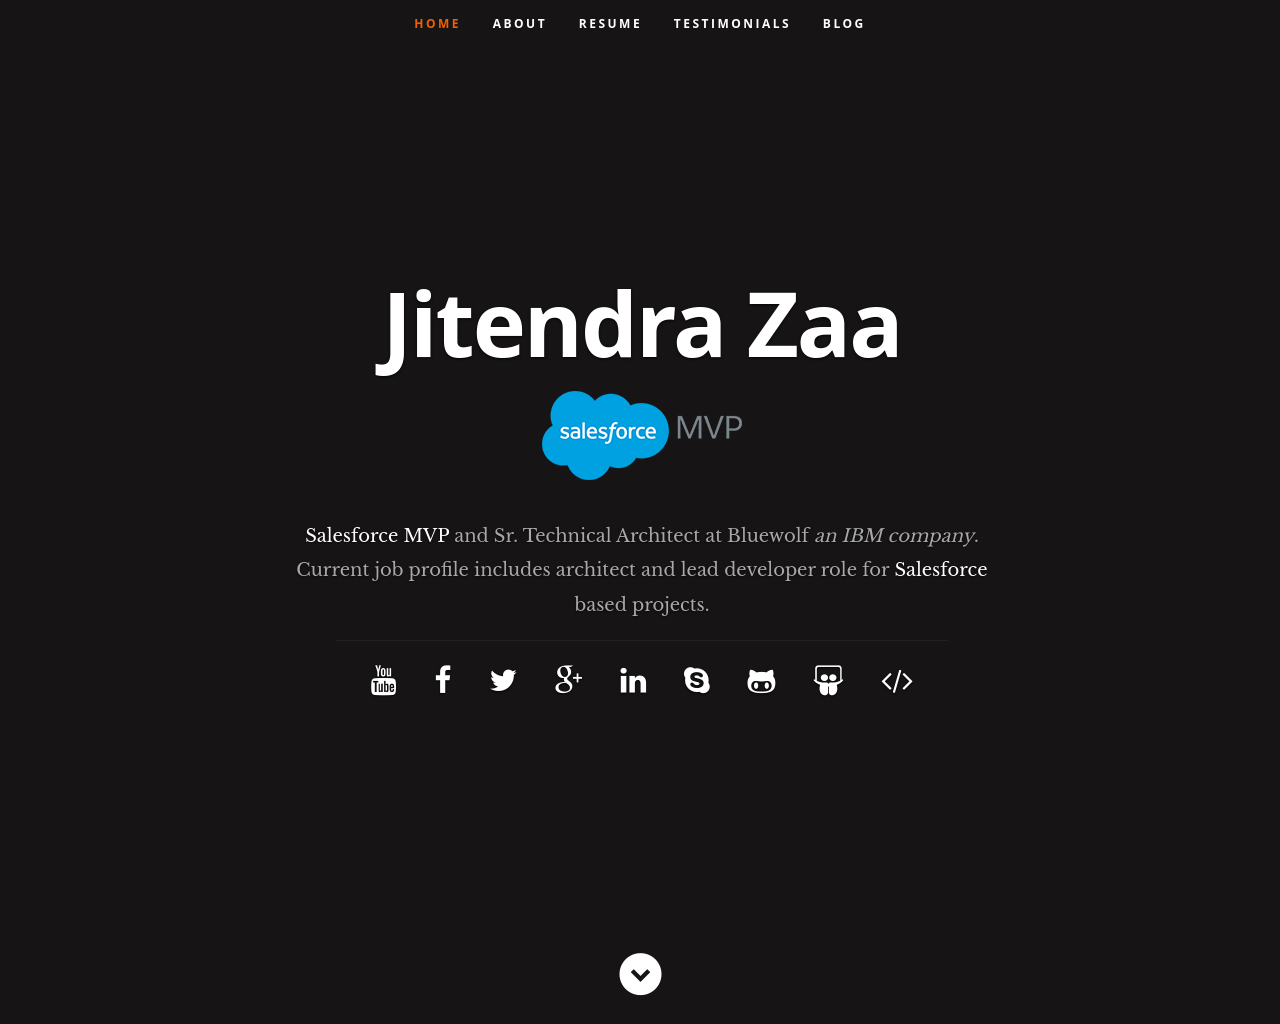 jitendrazaa.com